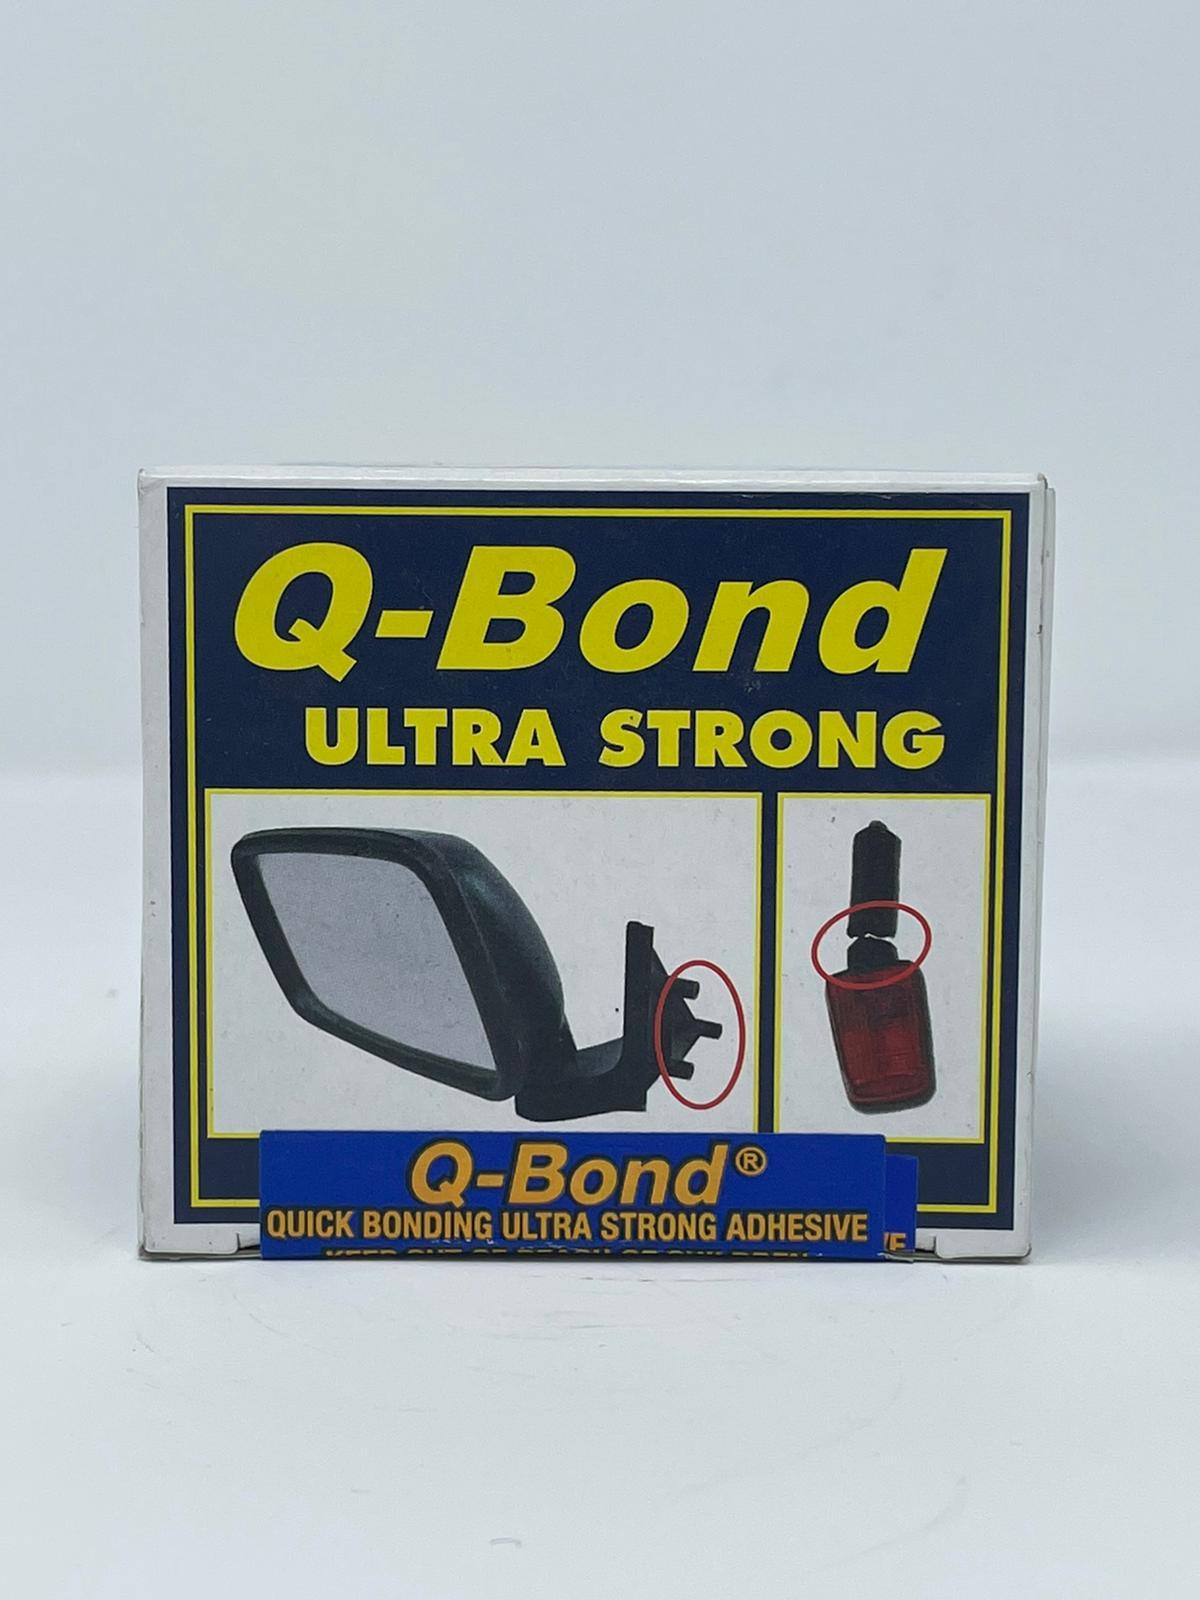 Q-Bond Quick Bonding Adhesive Kit | Buy Online | RefinishMall.com